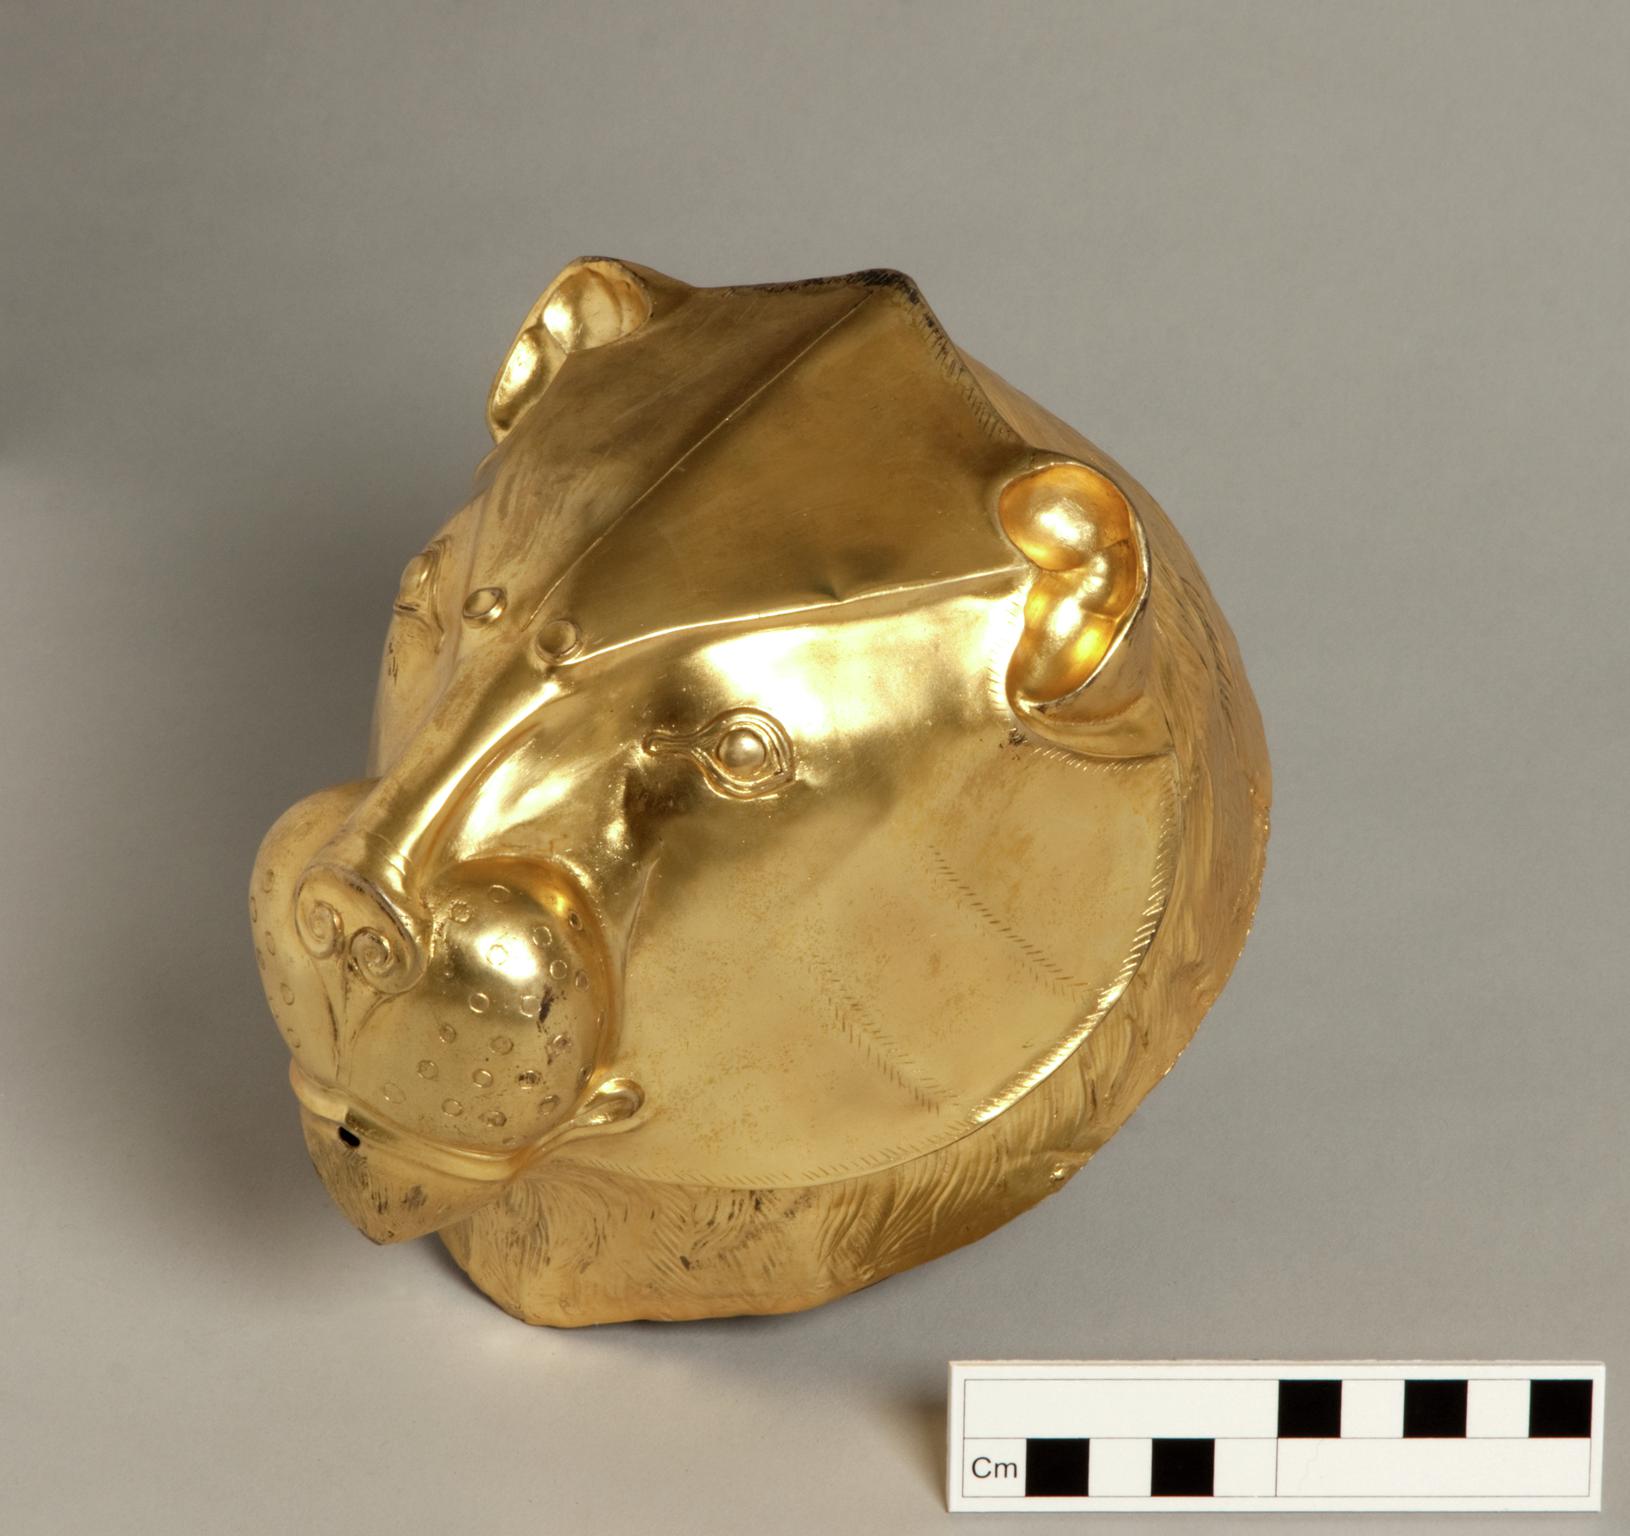 Mycenean gold mask (Replica)